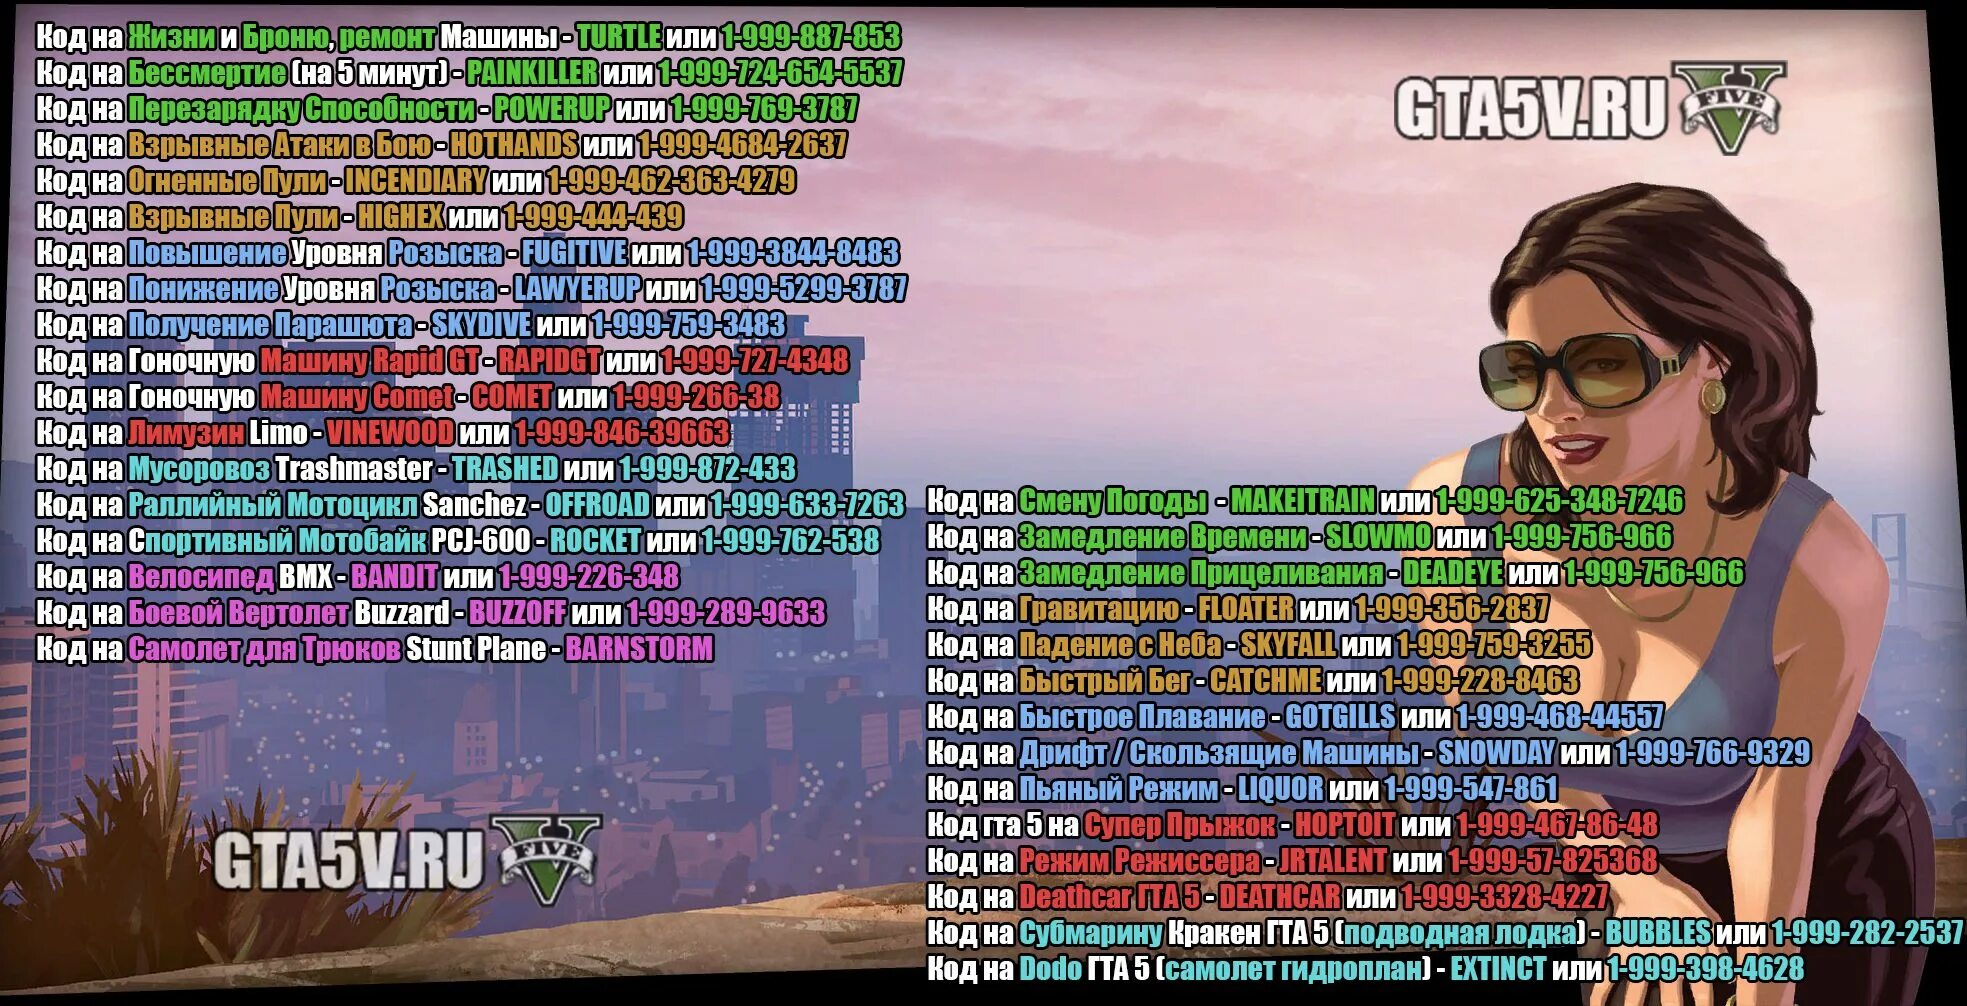 Dig to china codes. Читы на ГТА 5 чит коды на ГТА 5. GTA Grand Theft auto коды 5. Код GTA V код для GTA V. GTA 5 Чита.